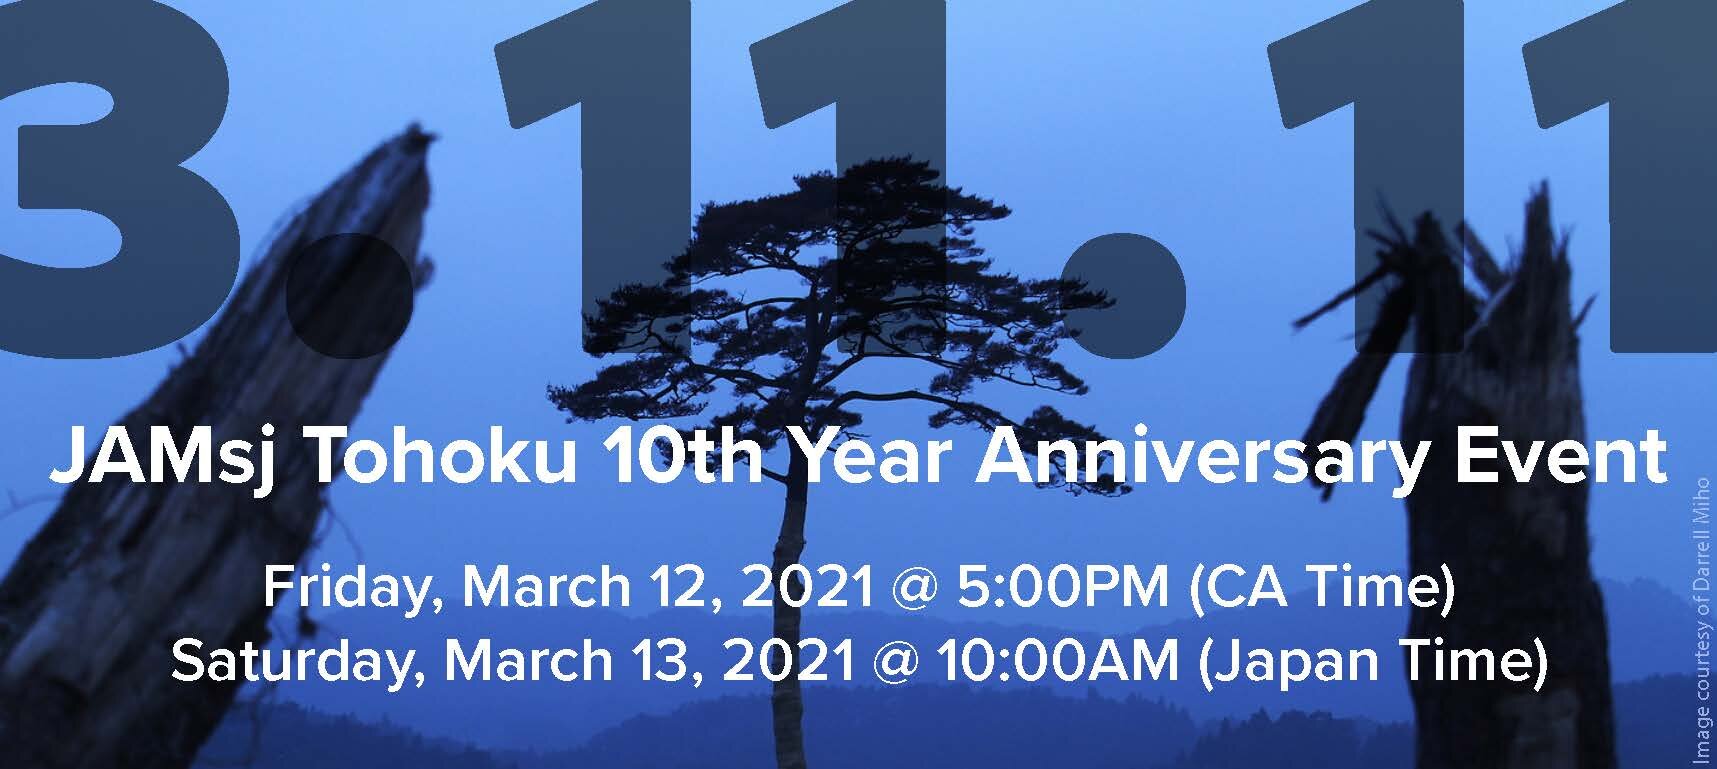 Tohoku 10th Year Anniversary Event Via Zoom Japanese American Museum Of San Jose